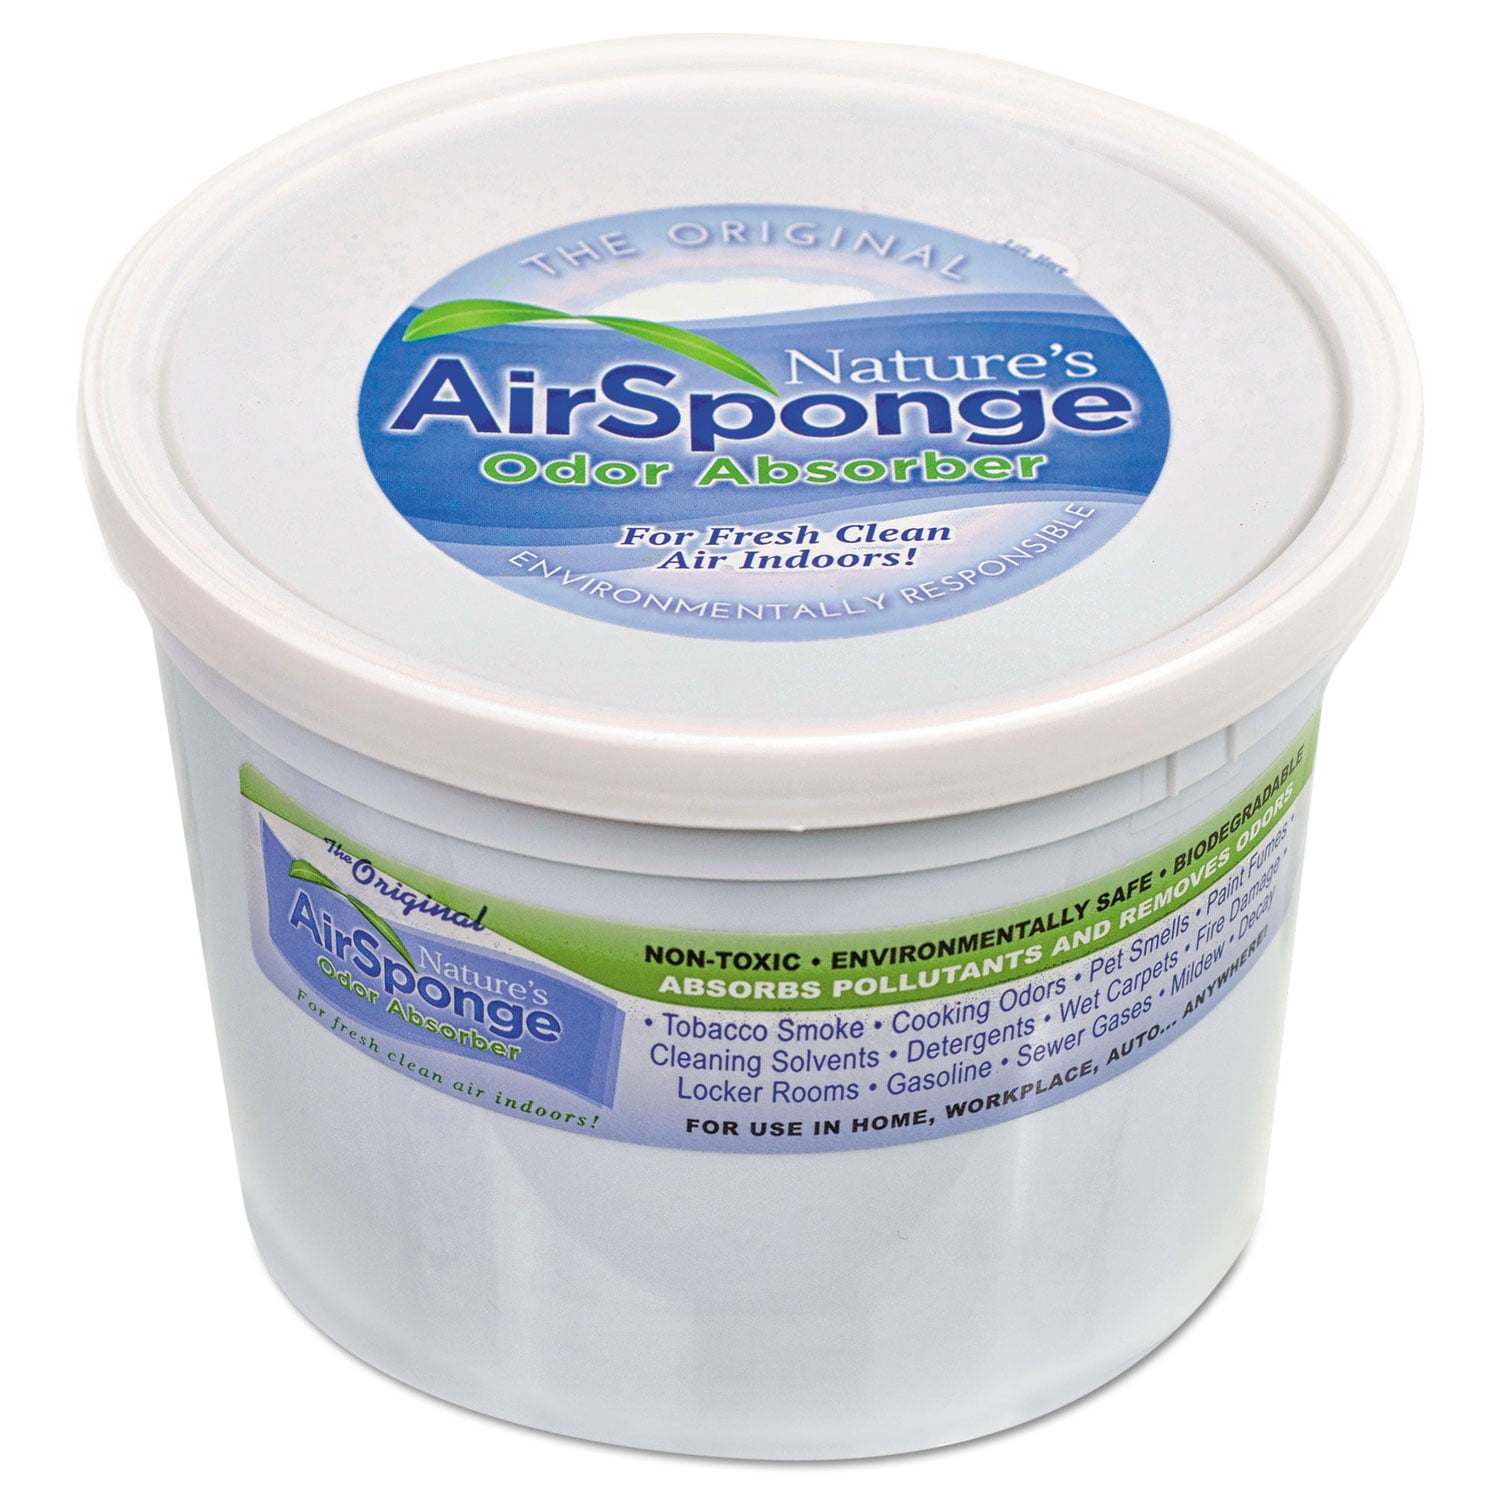 Bad Air Sponge Odor Neutralant, 14 Ounces, Office, 5pack Bad Air Sponge  Air Odor Absorbent